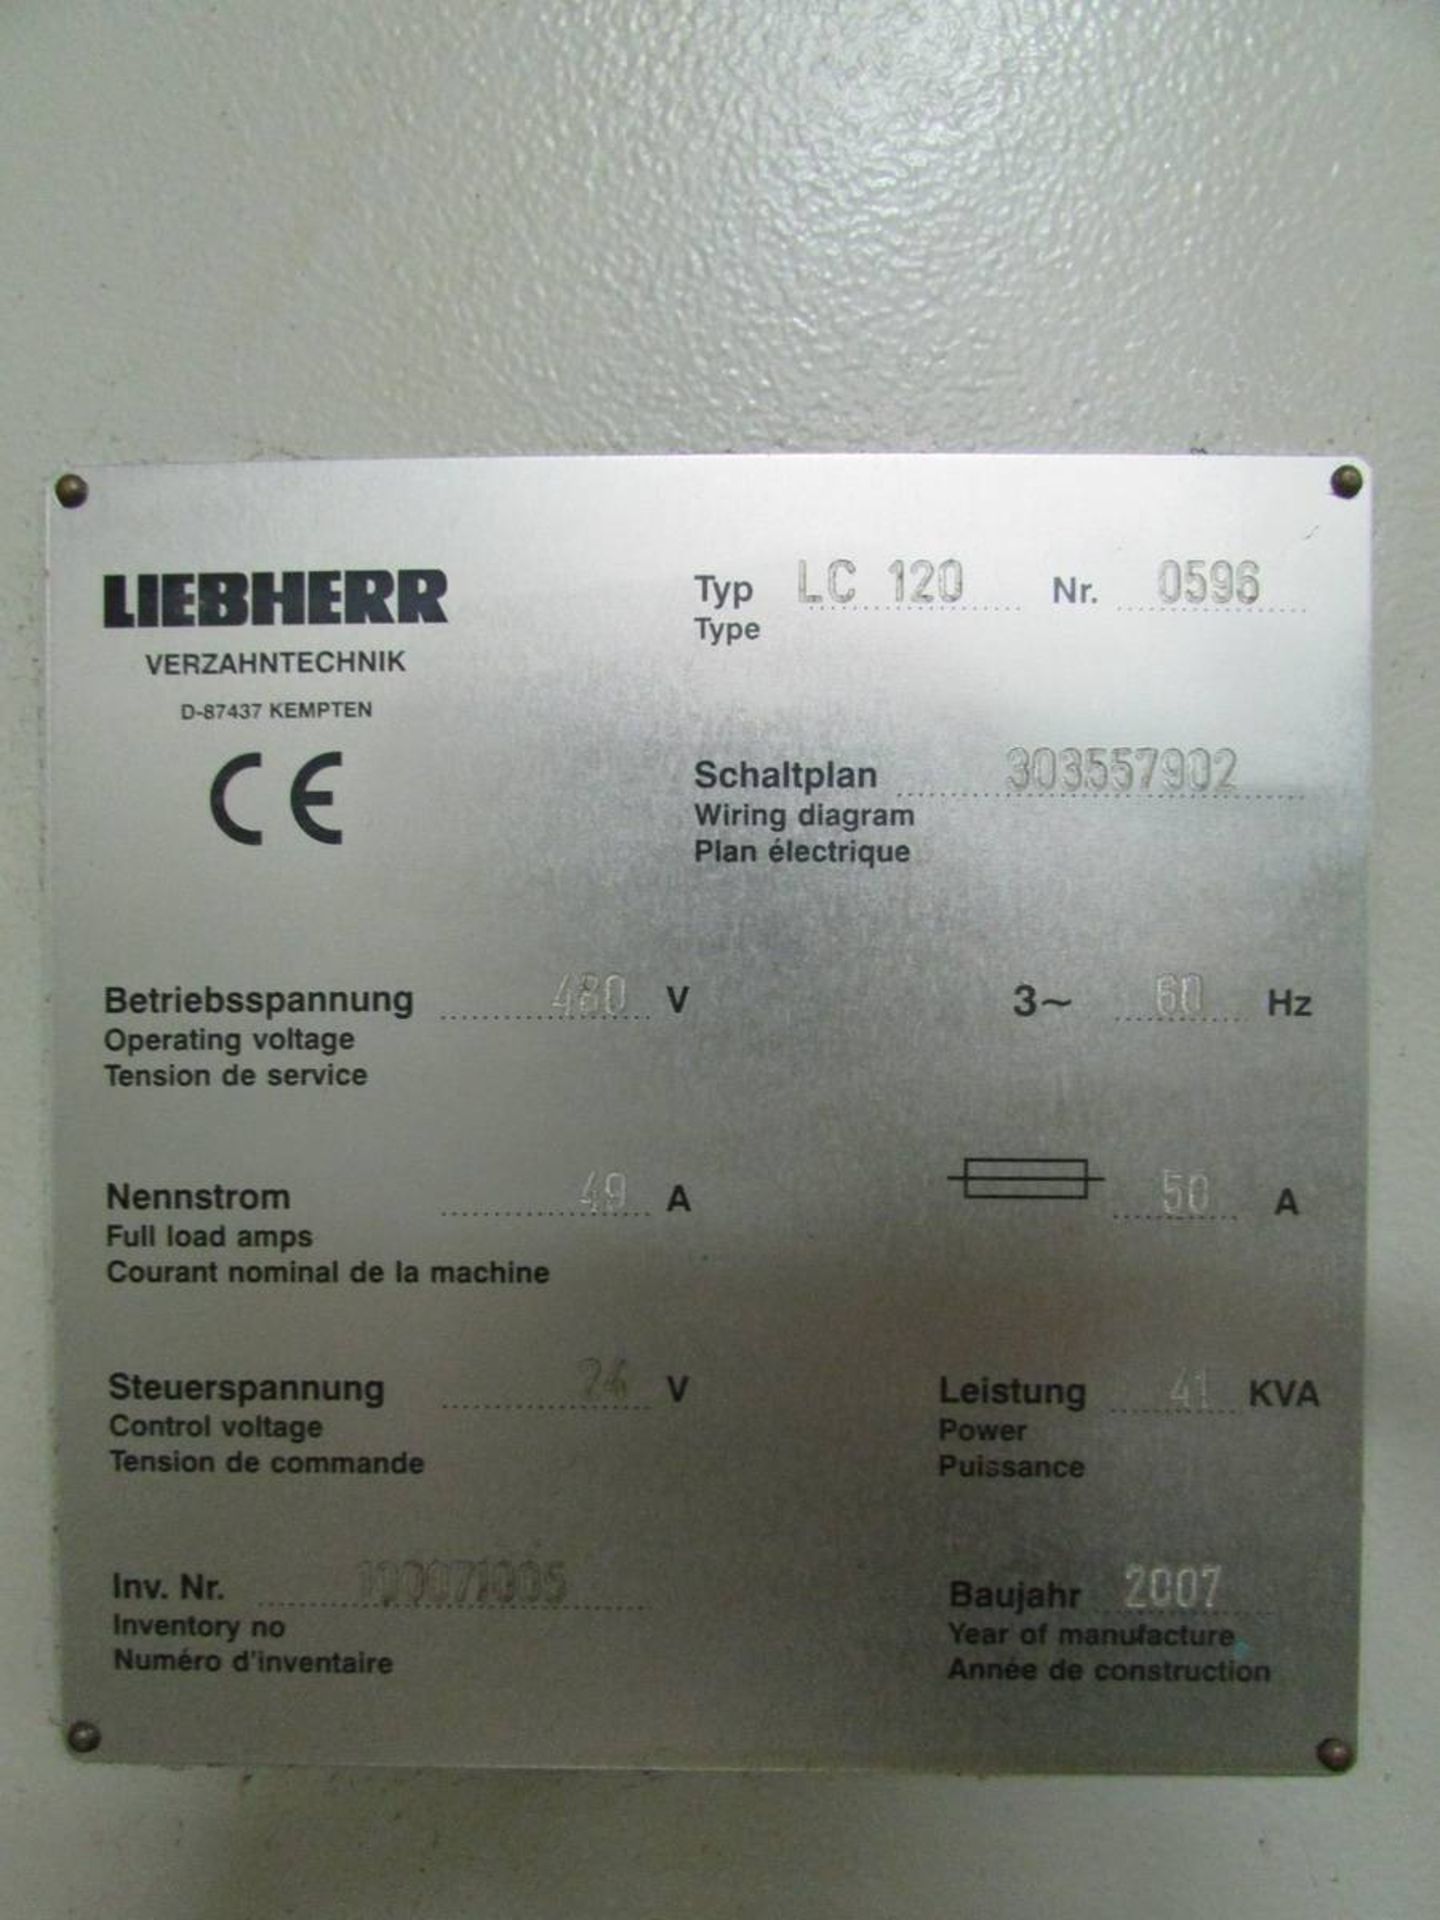 2007 Liebherr LC 120 CNC Gear Hobbing Machine - Image 20 of 21